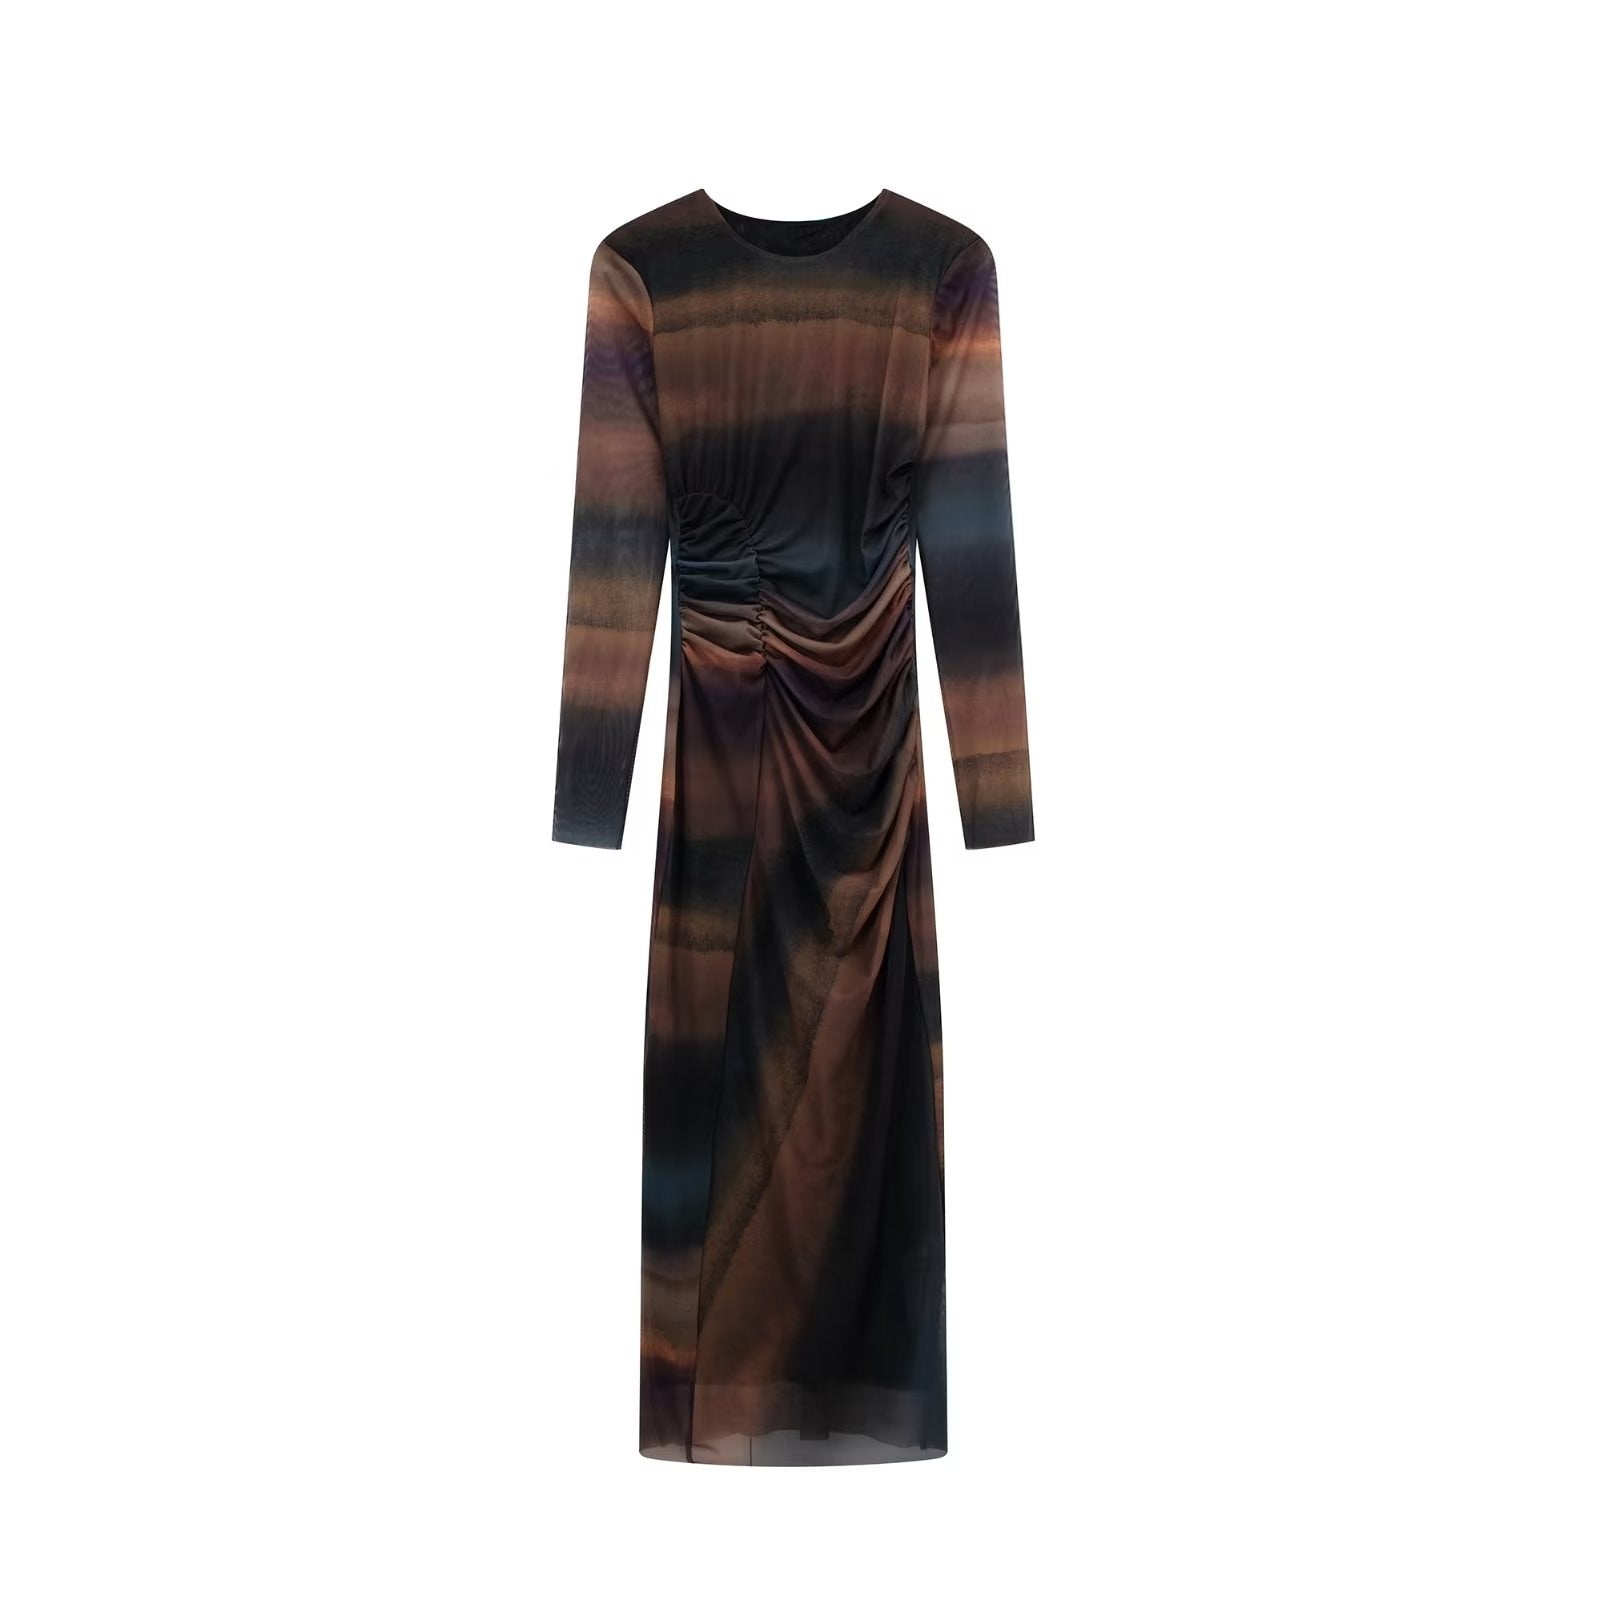 Gradient Tye Dye Mesh Dress - @thestylistbritt - Kelly Obi New York